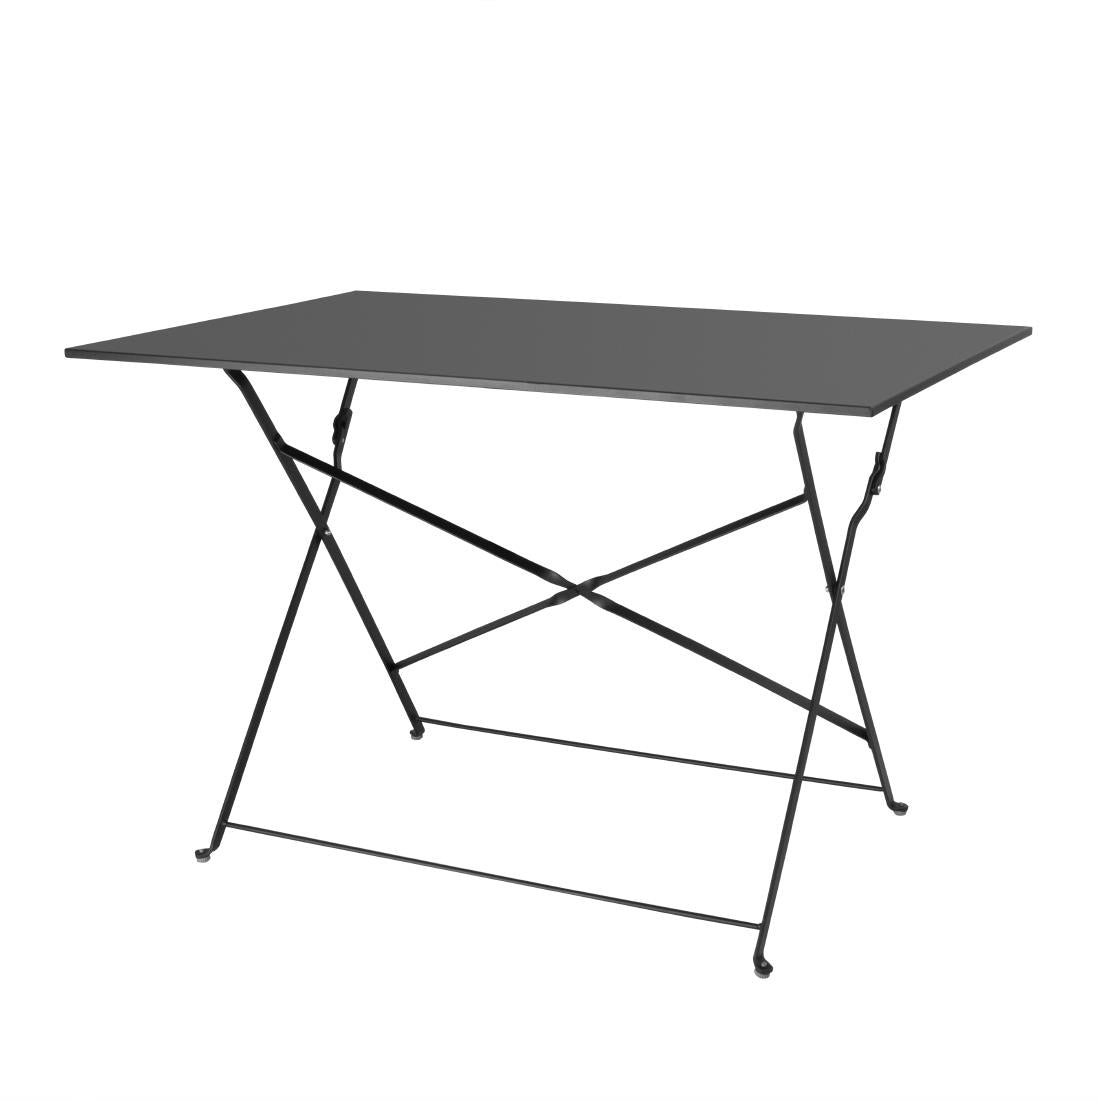 CH968 Bolero Pavement Style Folding Table Black 1100mm x 700mm JD Catering Equipment Solutions Ltd